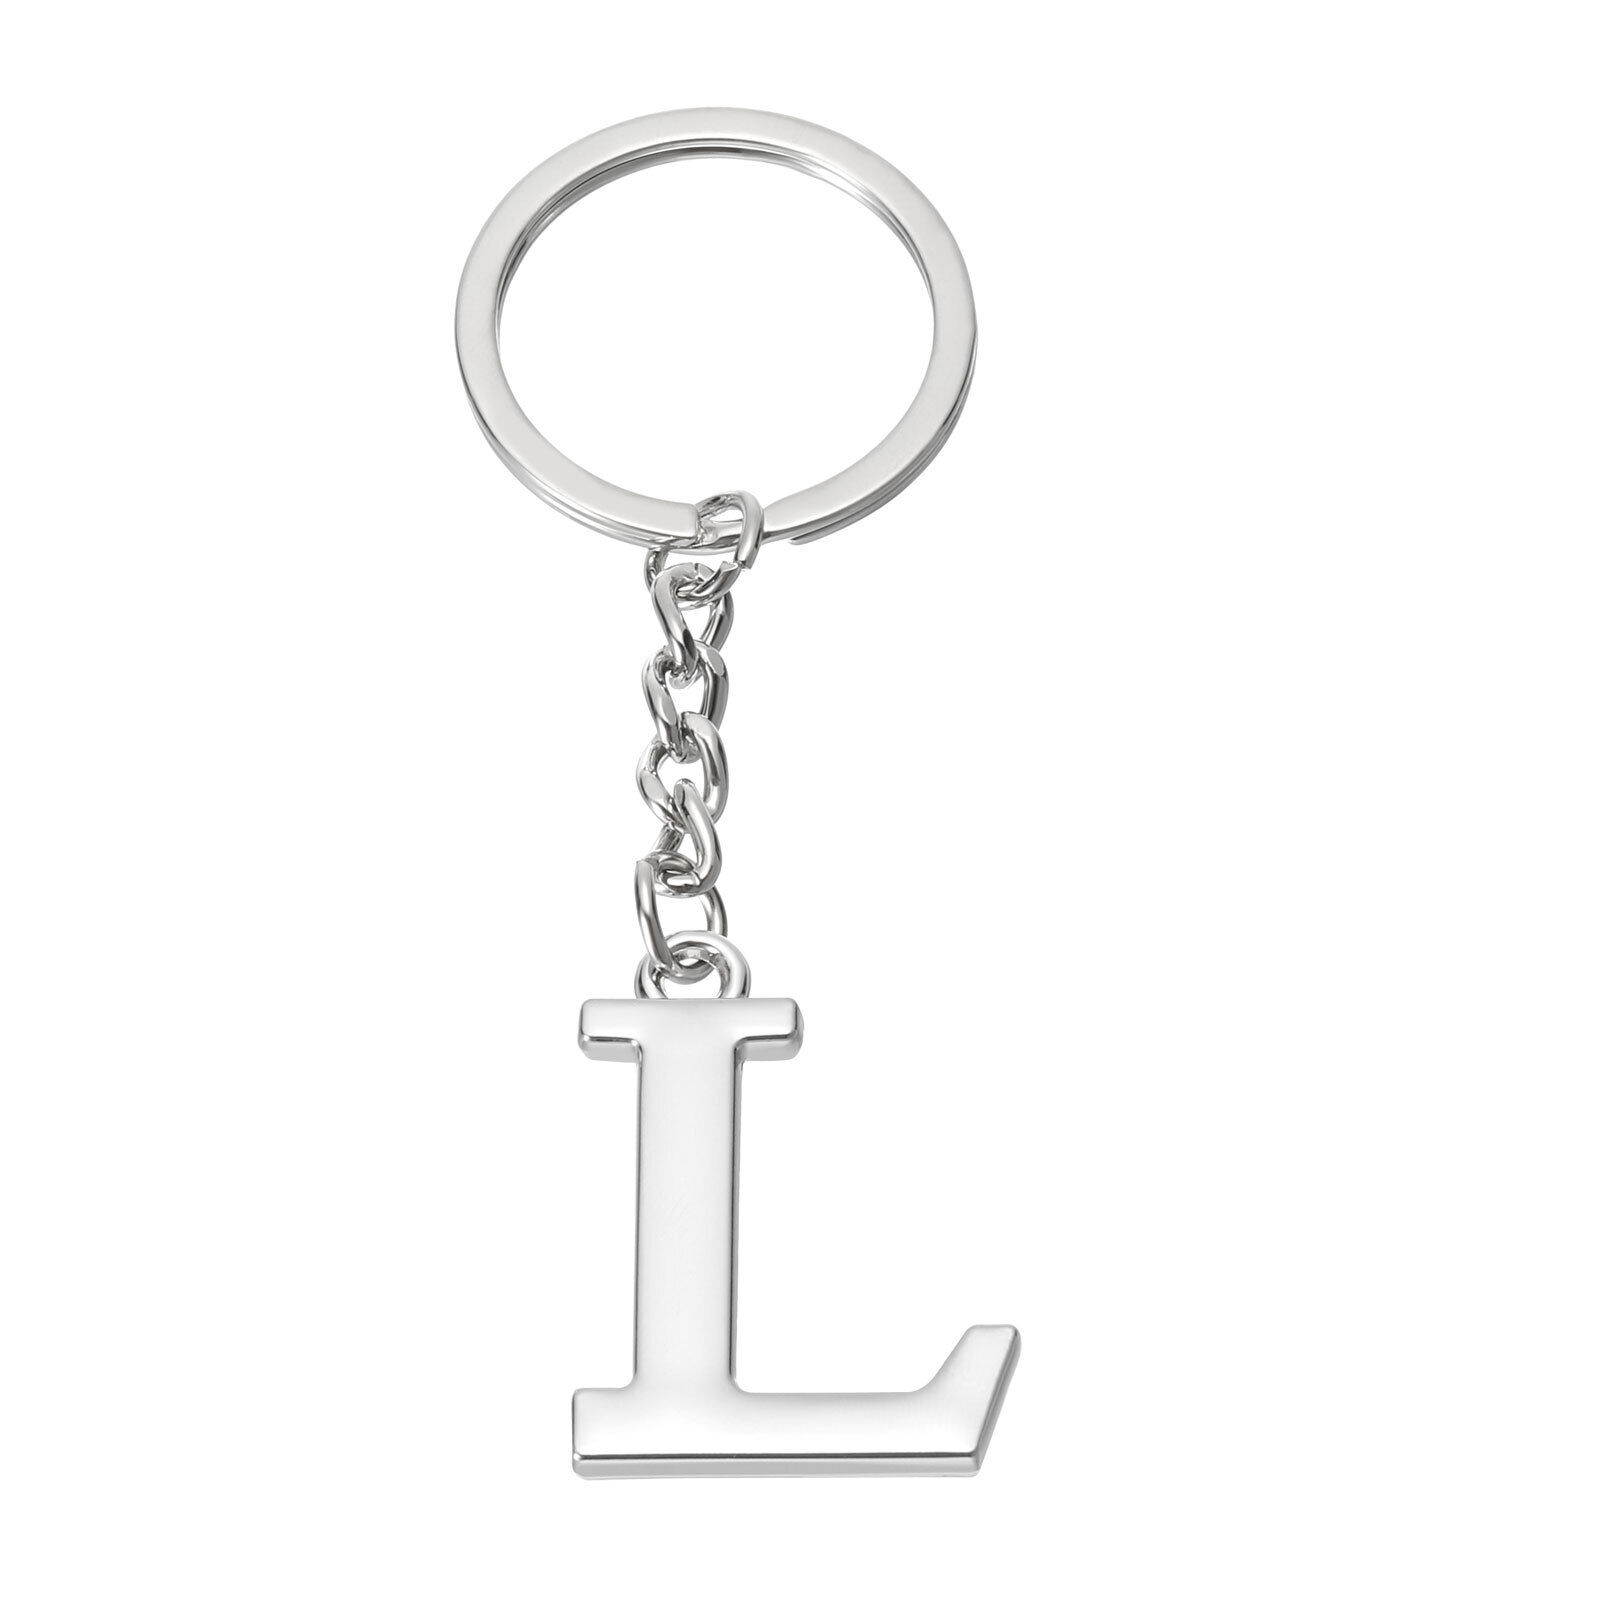 Initial Letter Key Chain, Letter L Key Chain Pendant Key Ring, Silver